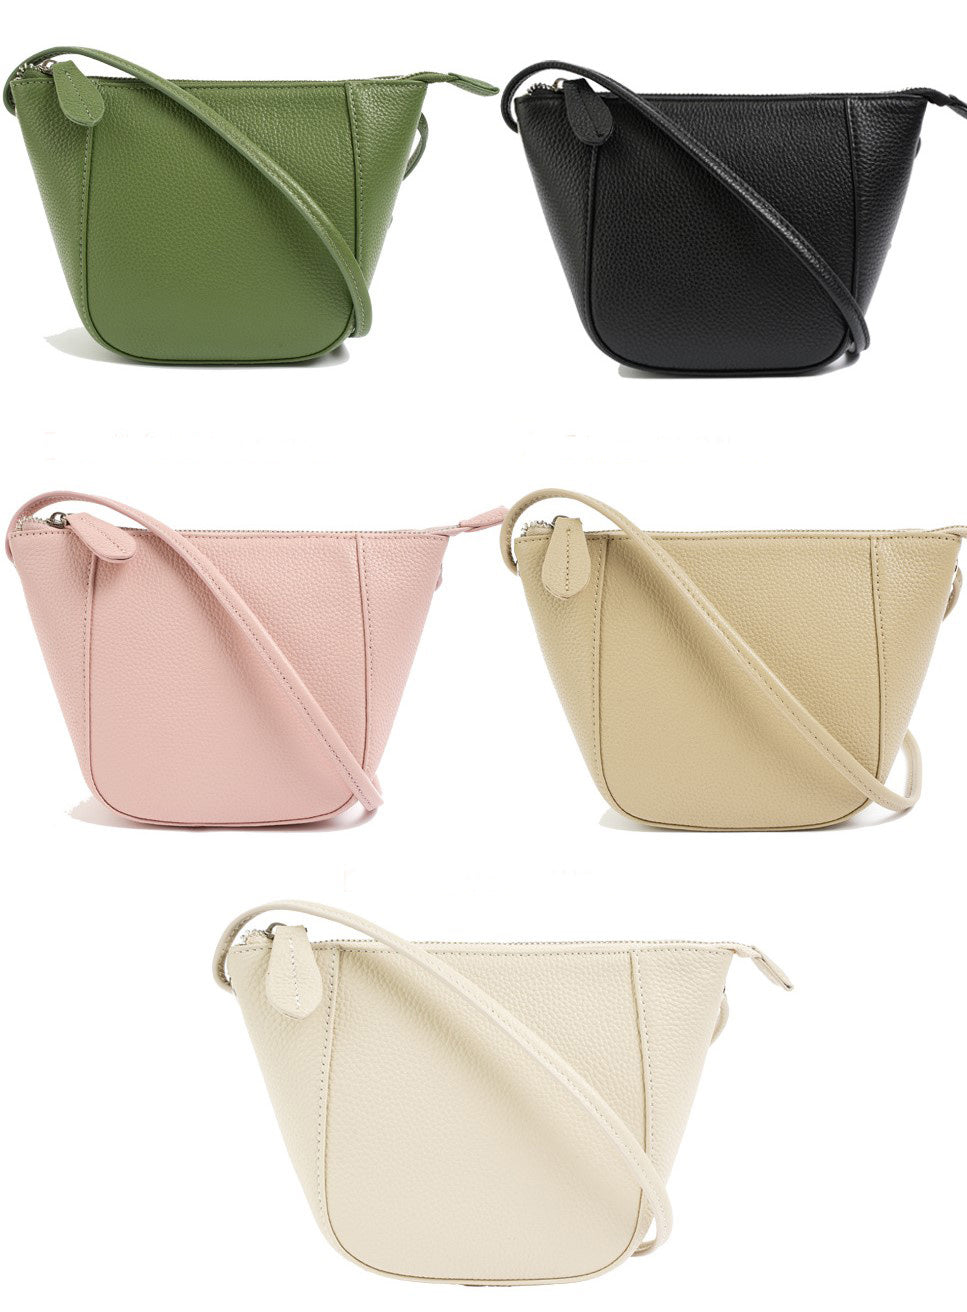 HIMODA leather crossbody bag - women's- 5 colors